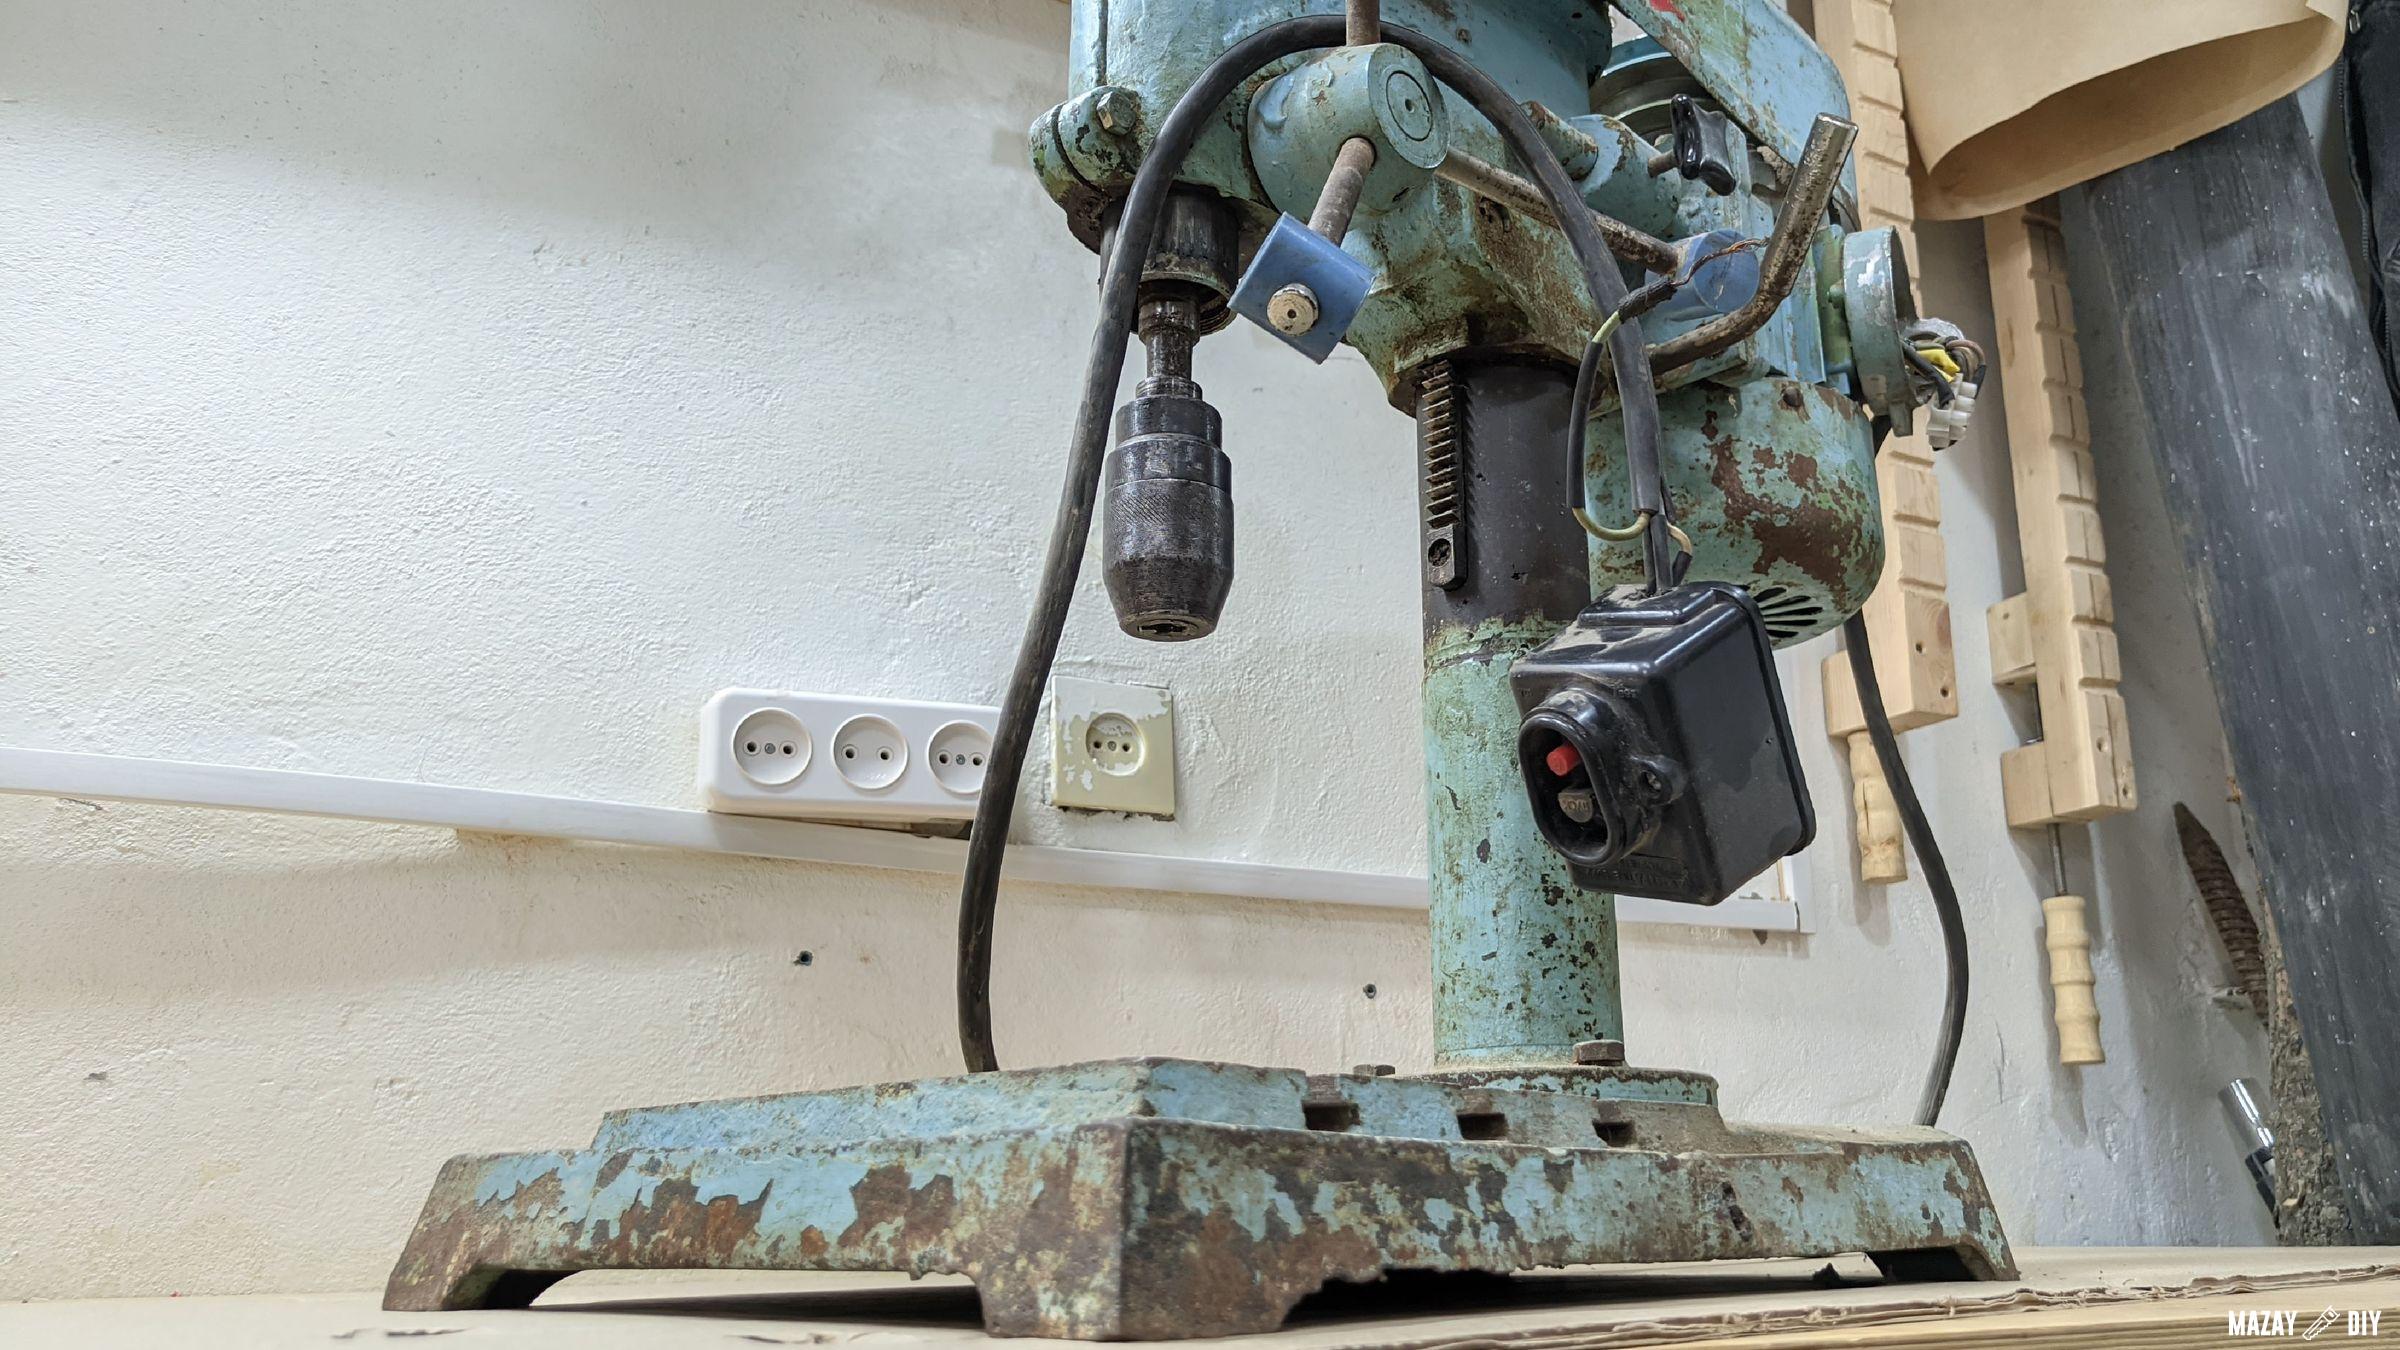 drill press restoration - before